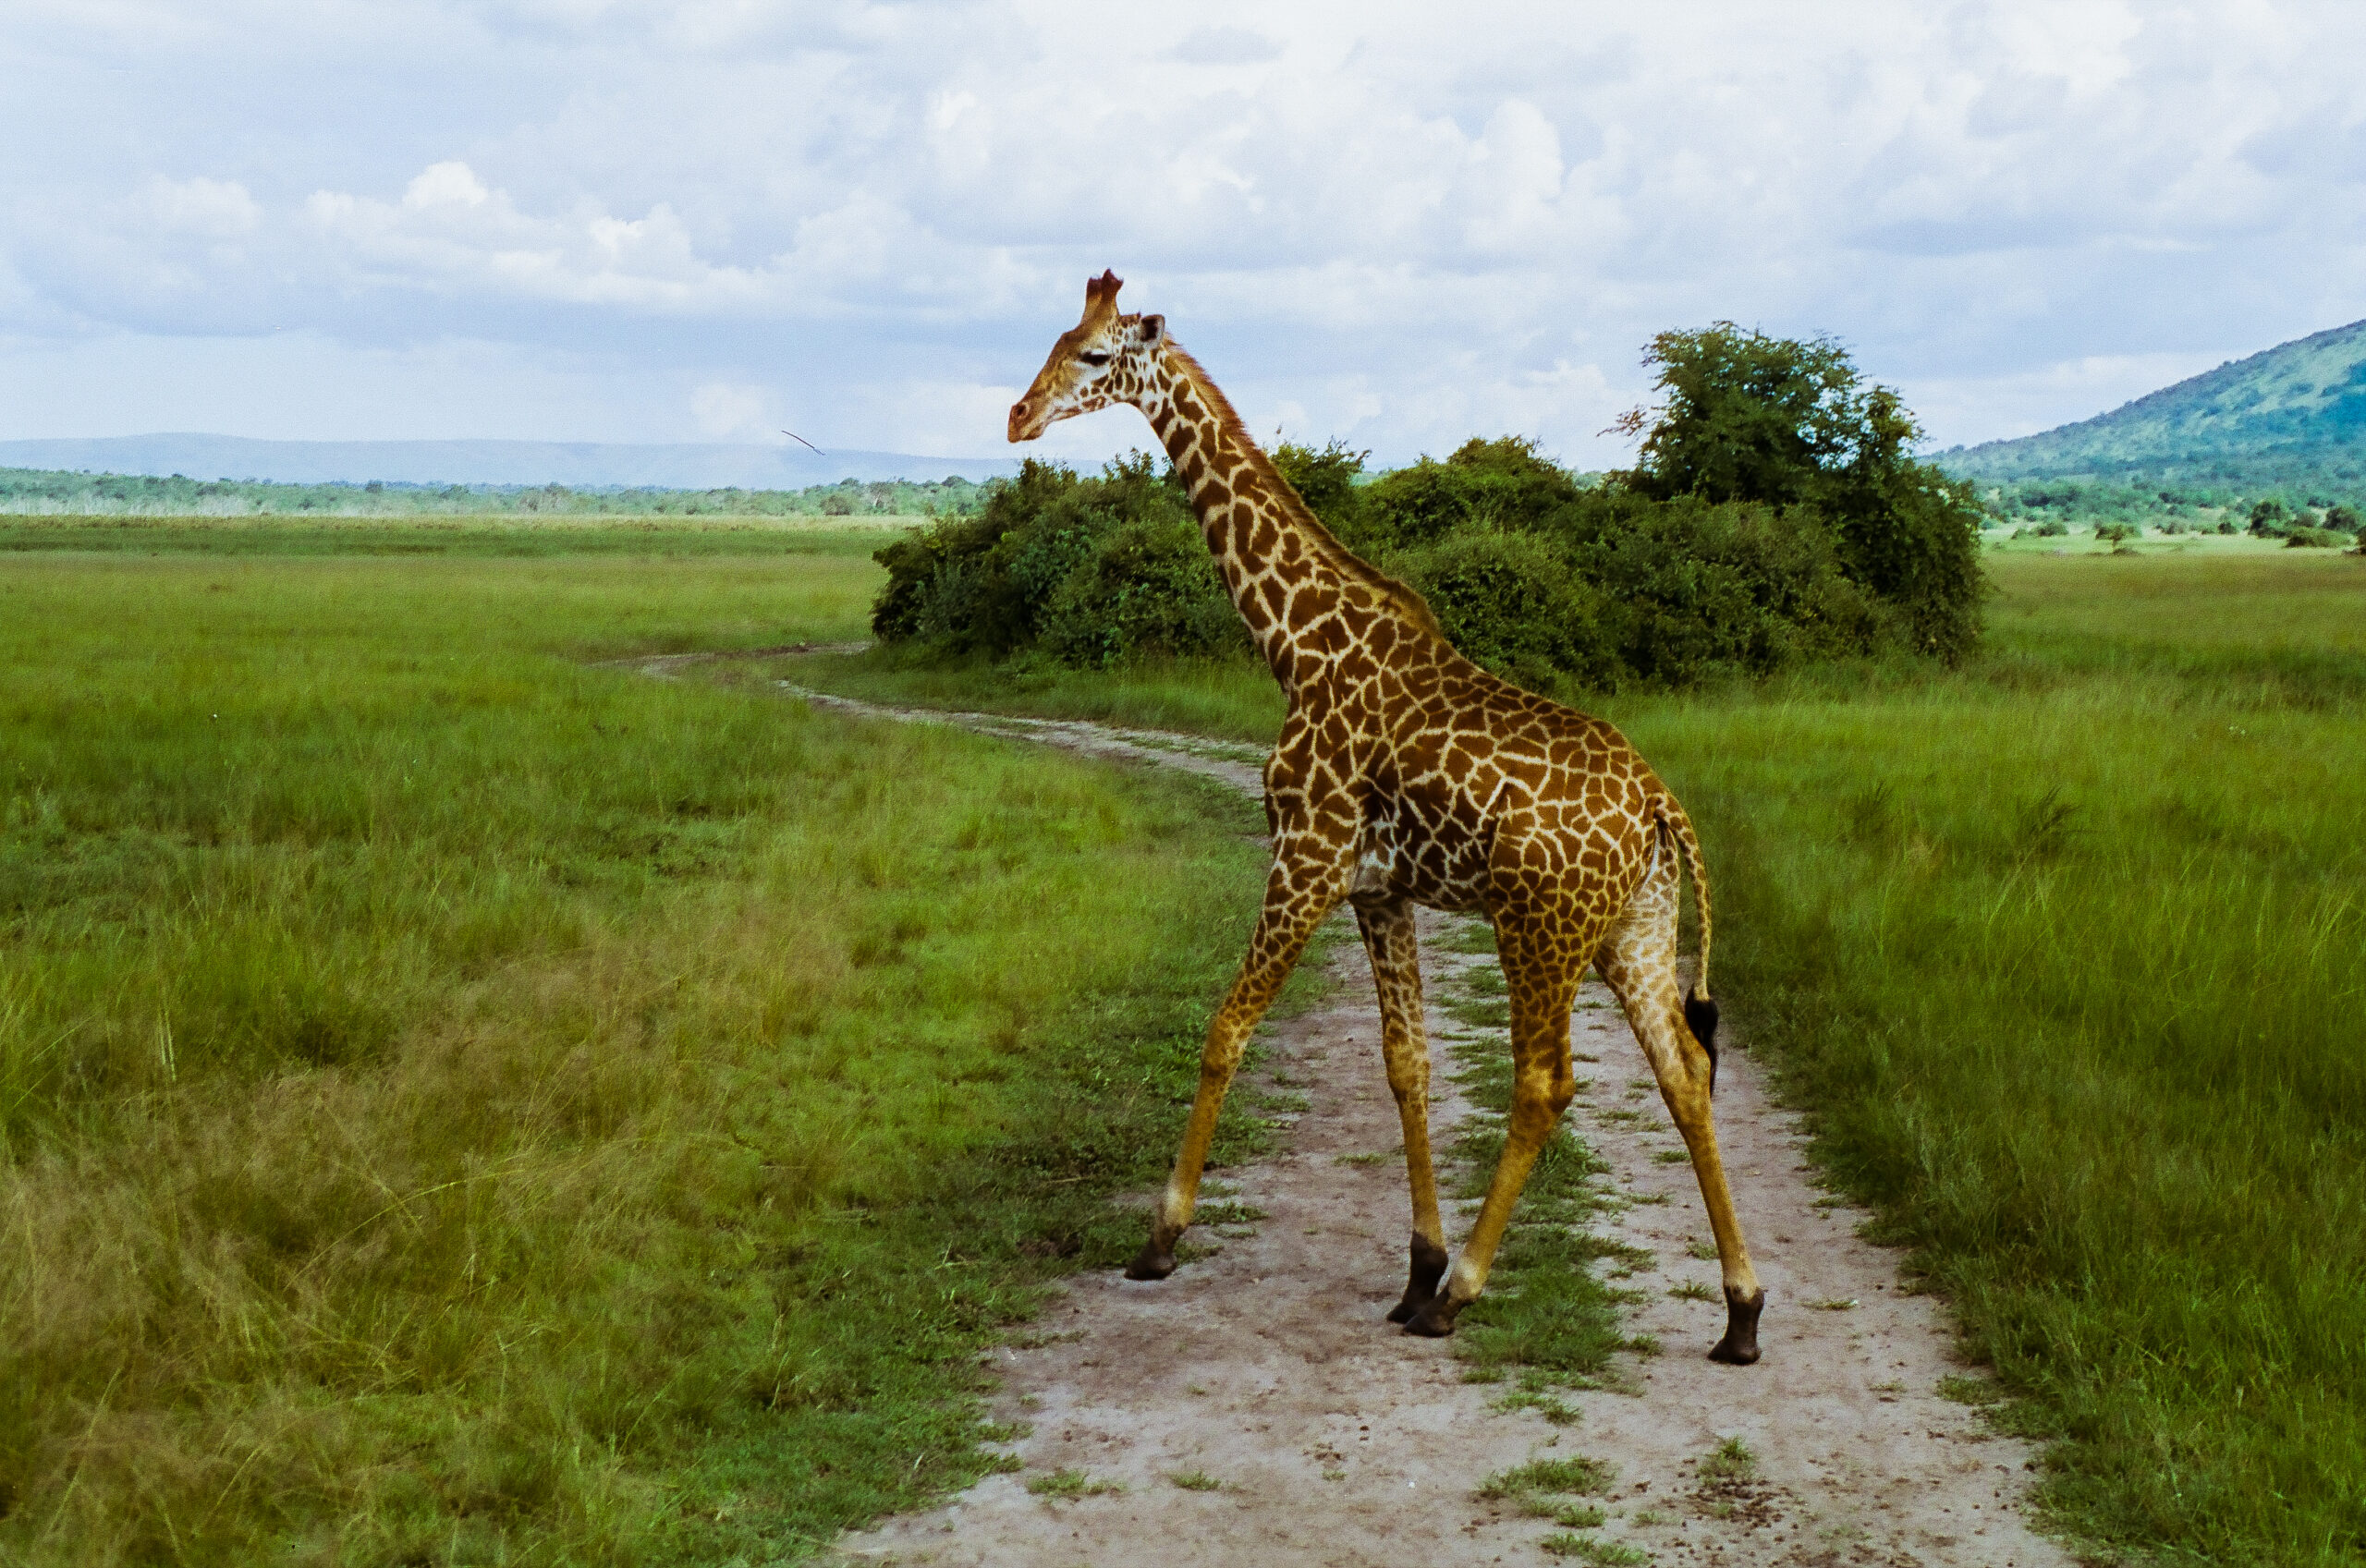 Awesome Wildlife trip to Rwanda National Park Akagera